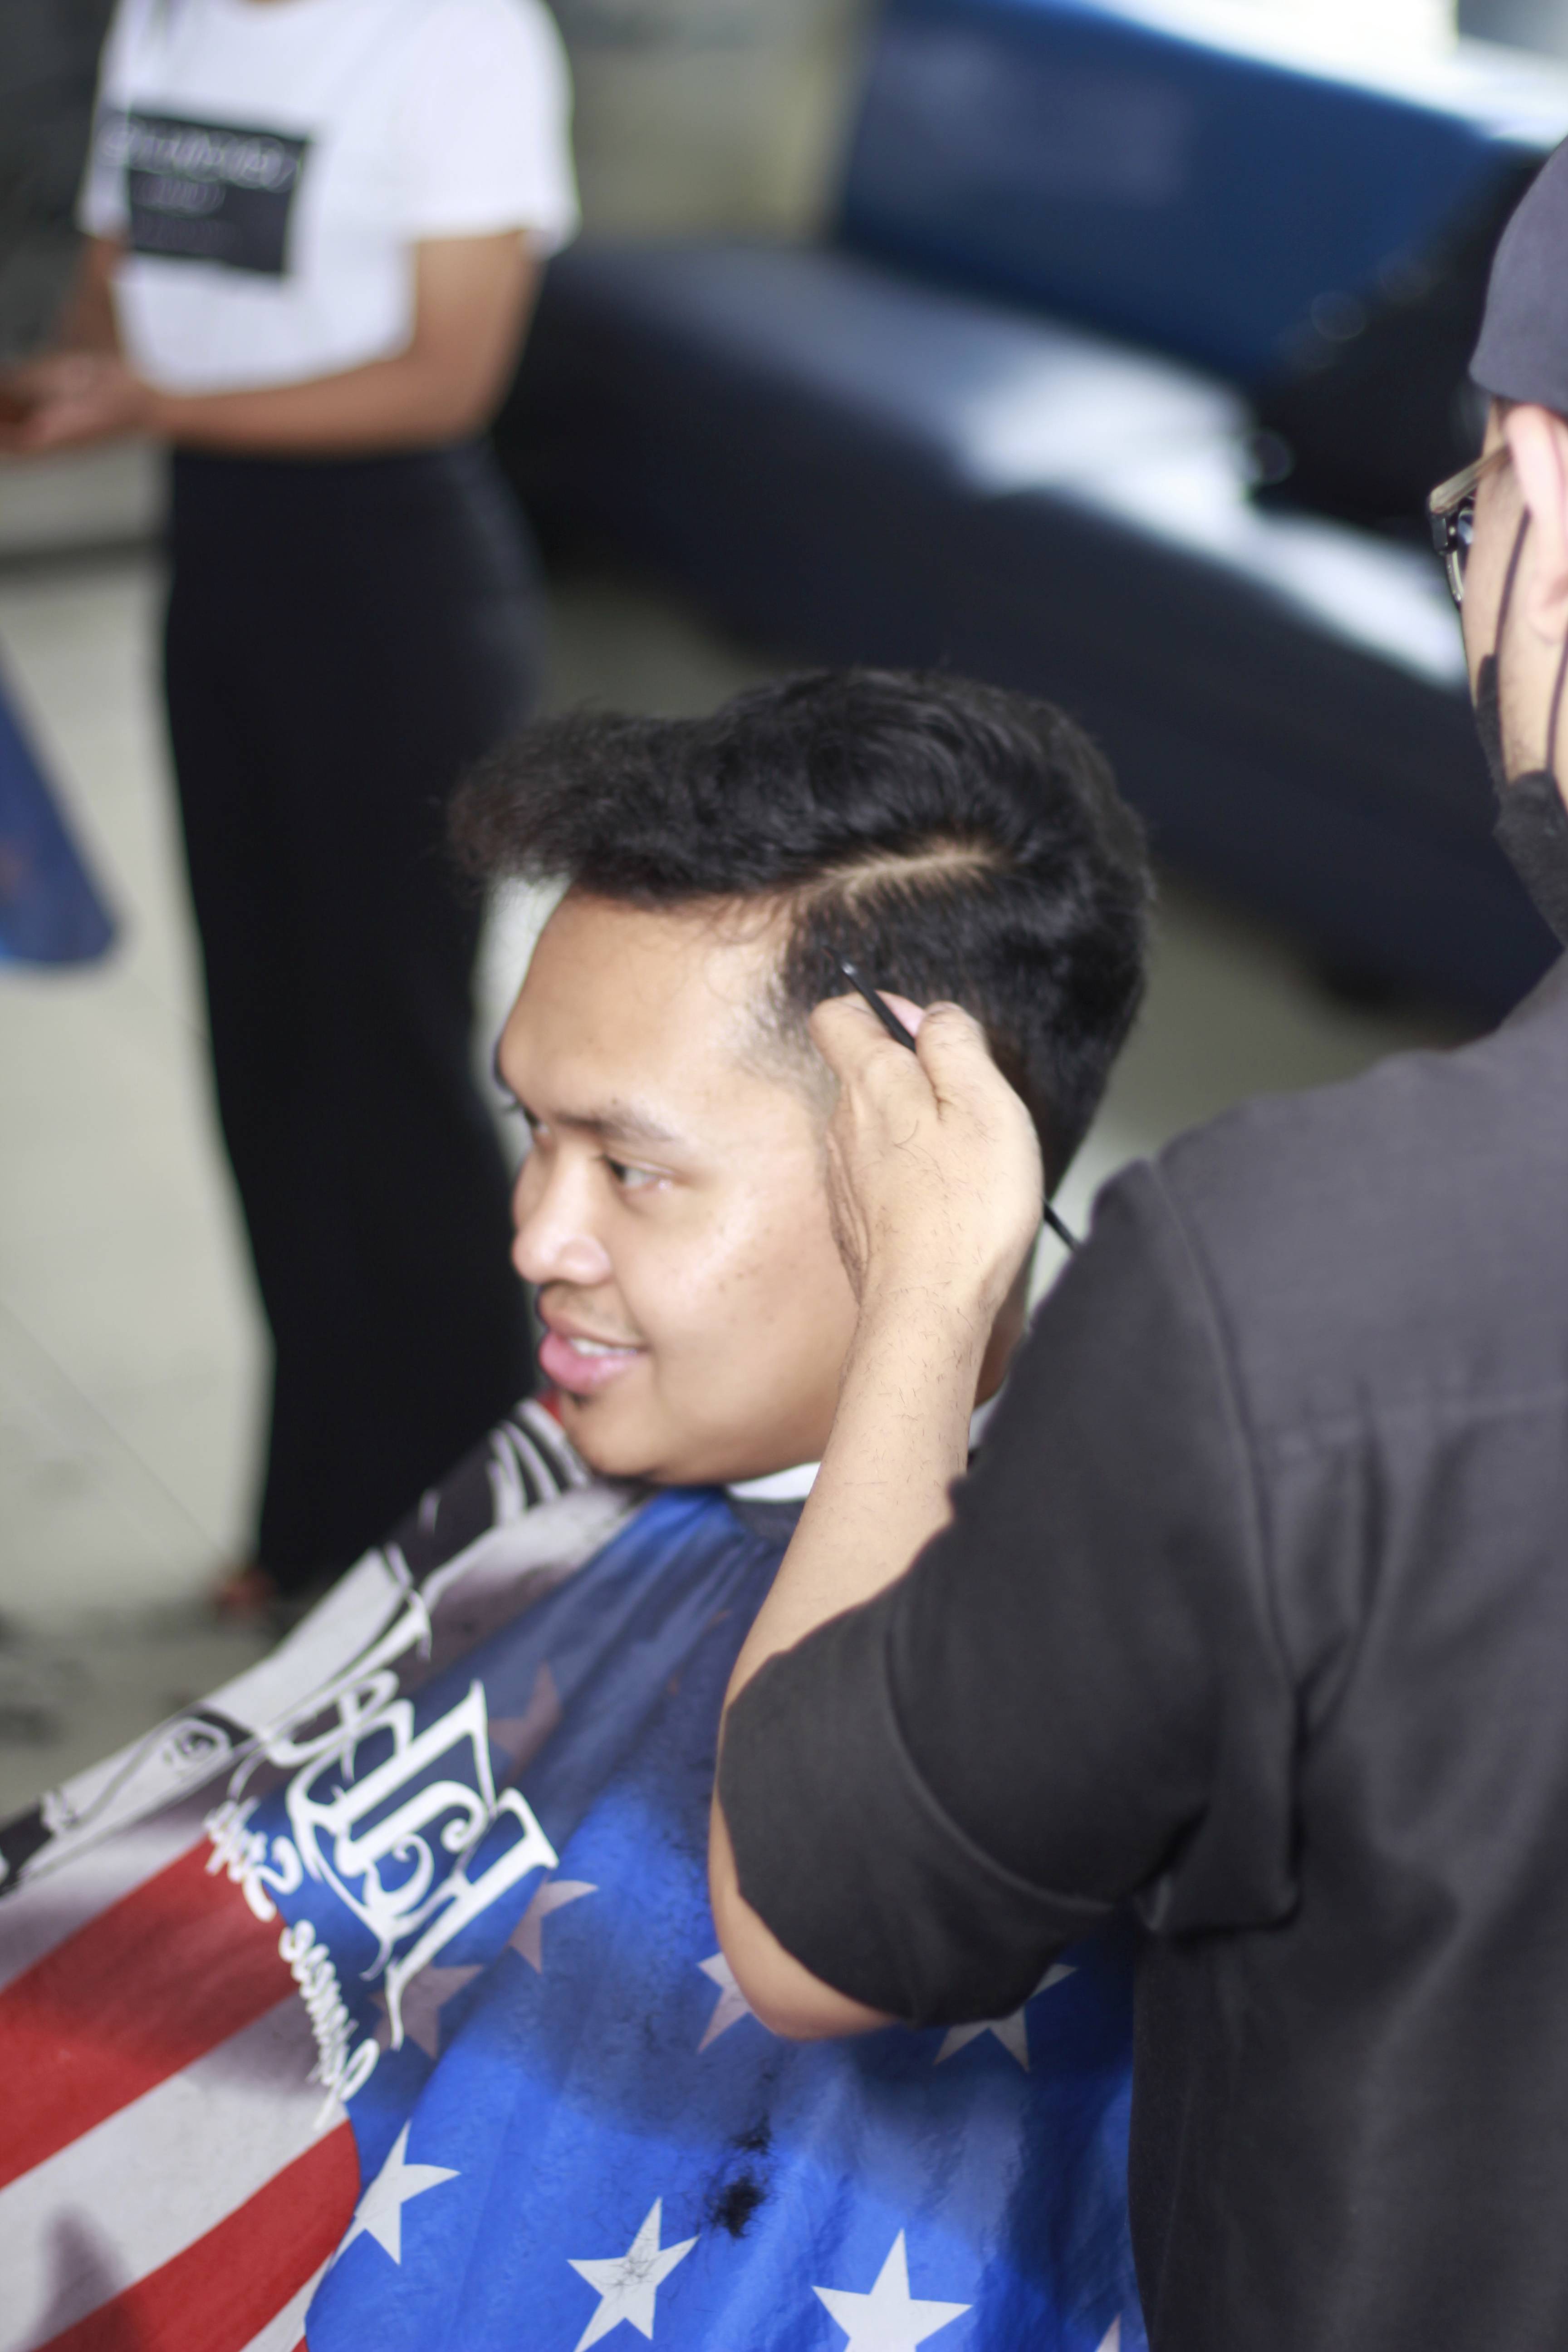 Jasa Potong Rambut Di Jl. Tumenggung Suryo Keren